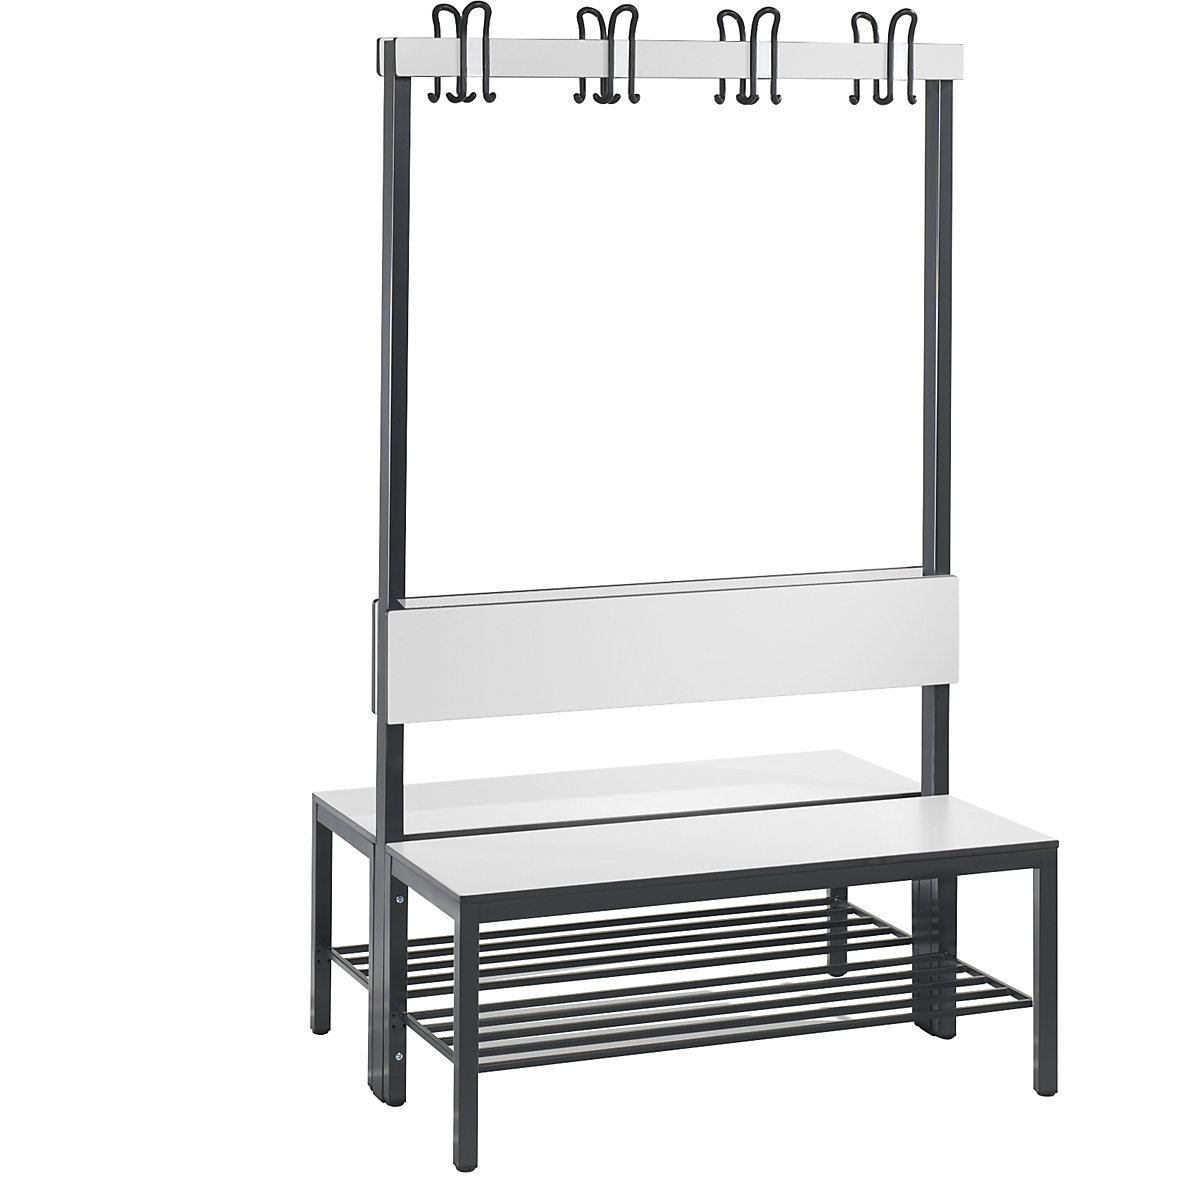 BASIC PLUS cloakroom bench, double sided – C+P, seat HPL, hook rail, shoe rack, length 1000 mm, white-8